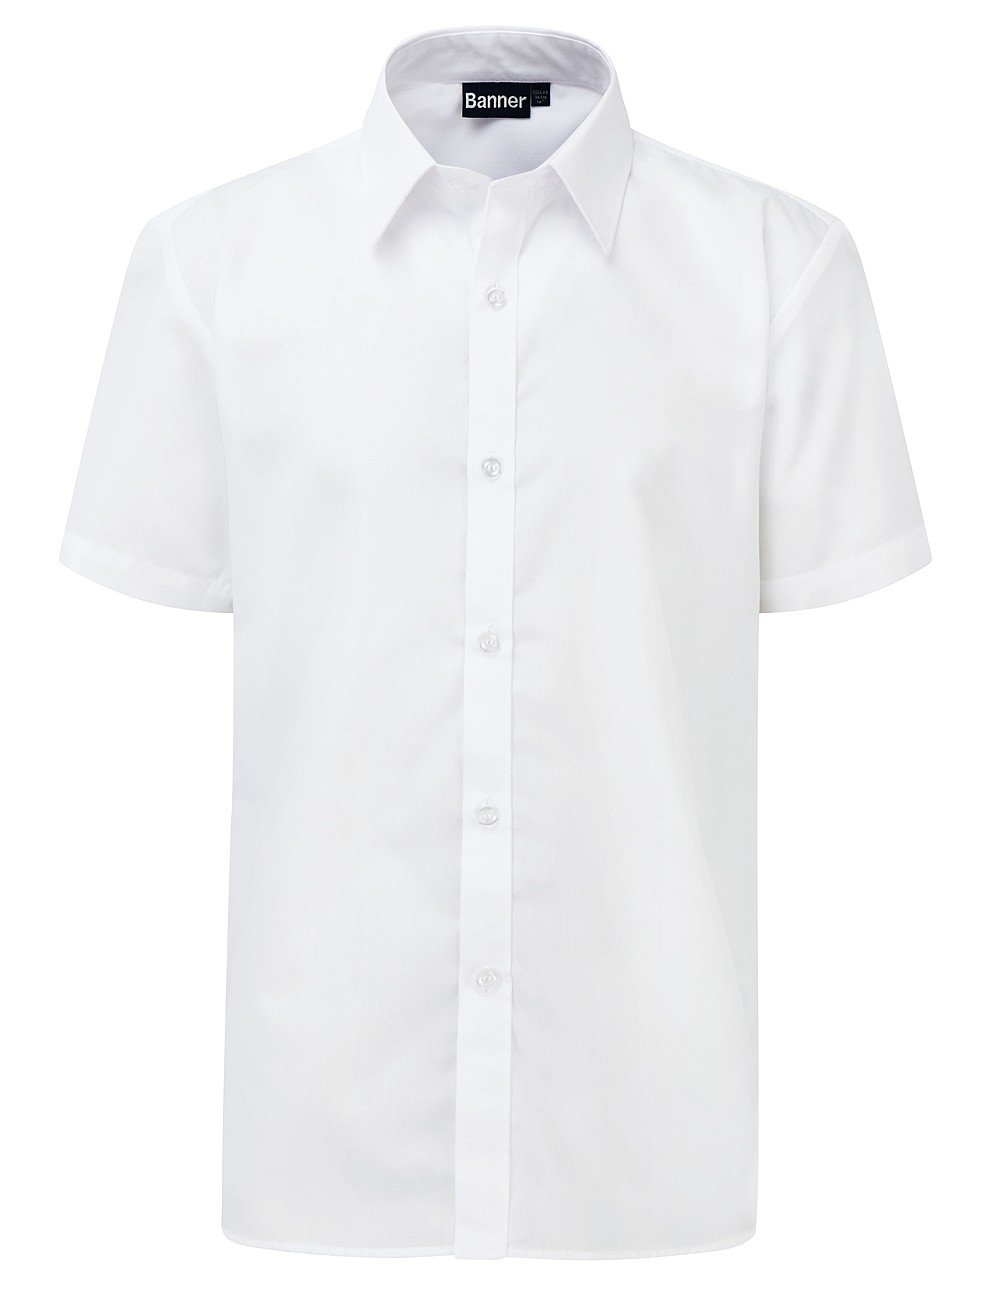 Slimfit Shirts (Twin Packs) S/S & L/S - Schoolwear Centres | School Uniform Centres